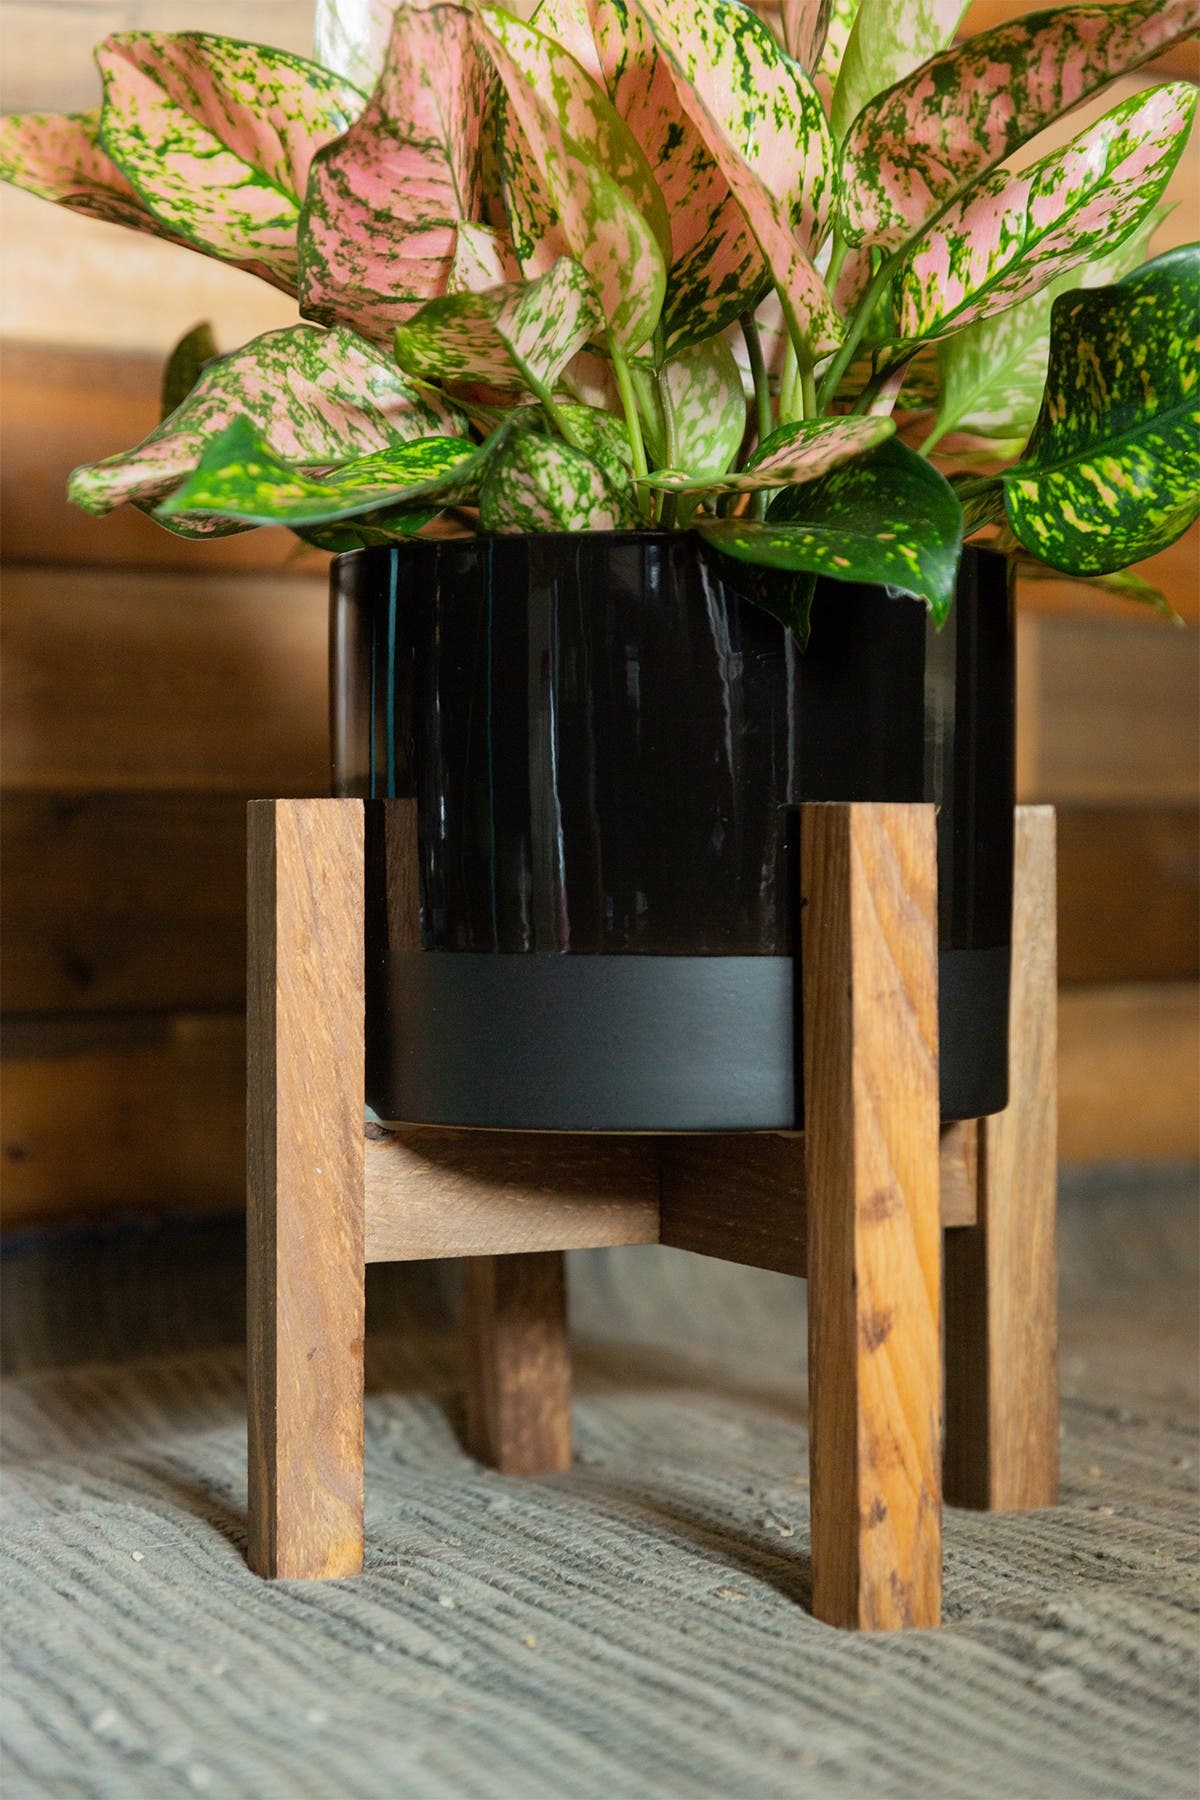 Flora Bunda 8" Large Two-tone Pot On Wood Stand In Black